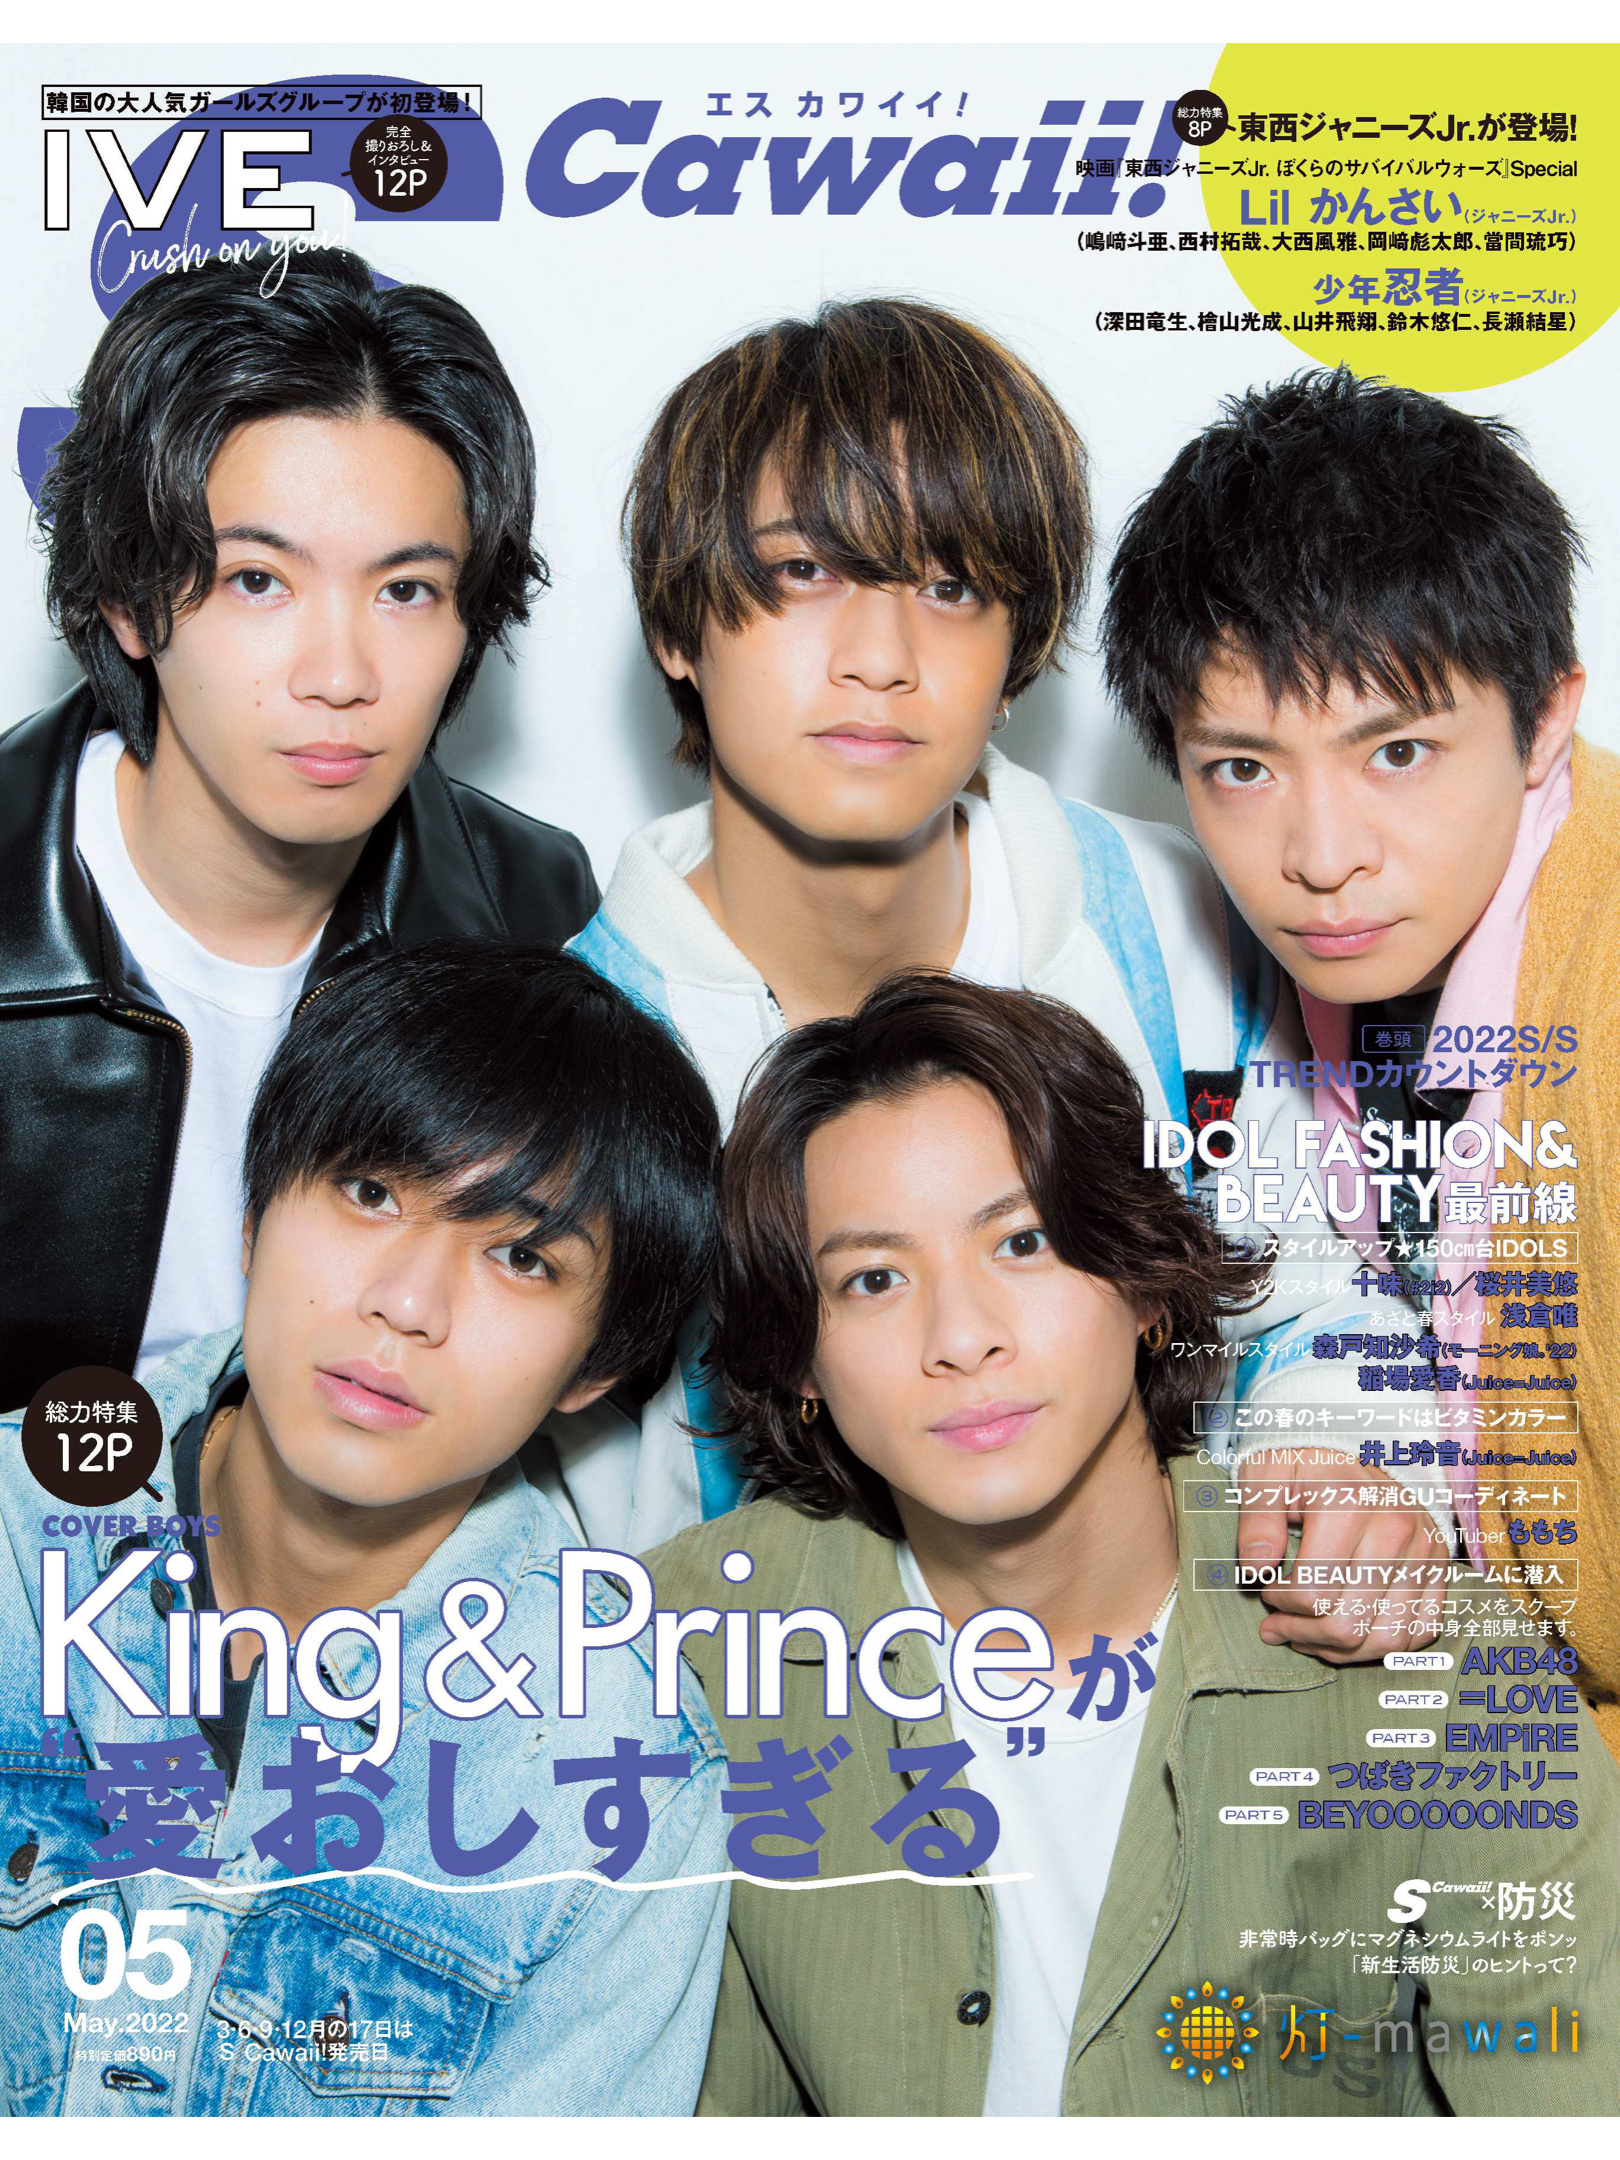 King&Prince S Cawaii!(エスカワイイ) 2022年 5 月号(表紙:King & Prince) - itotii